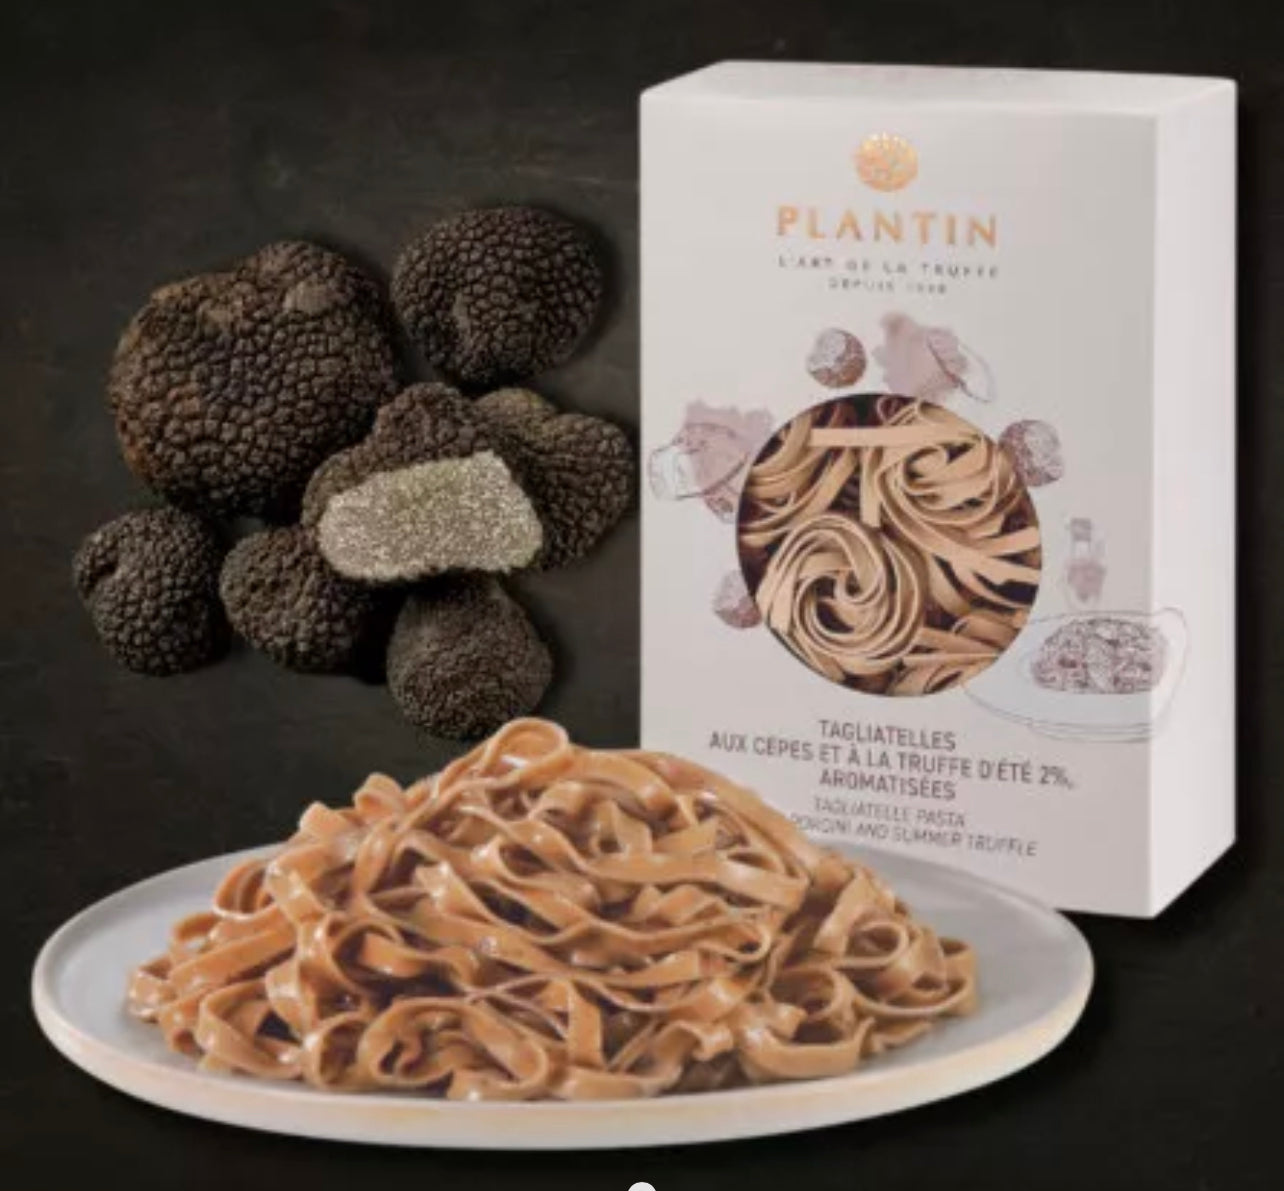 Tagliatelle with porcini mushrooms and summer truffle “Tuber Aestivum Vitt.” 2% - 250g